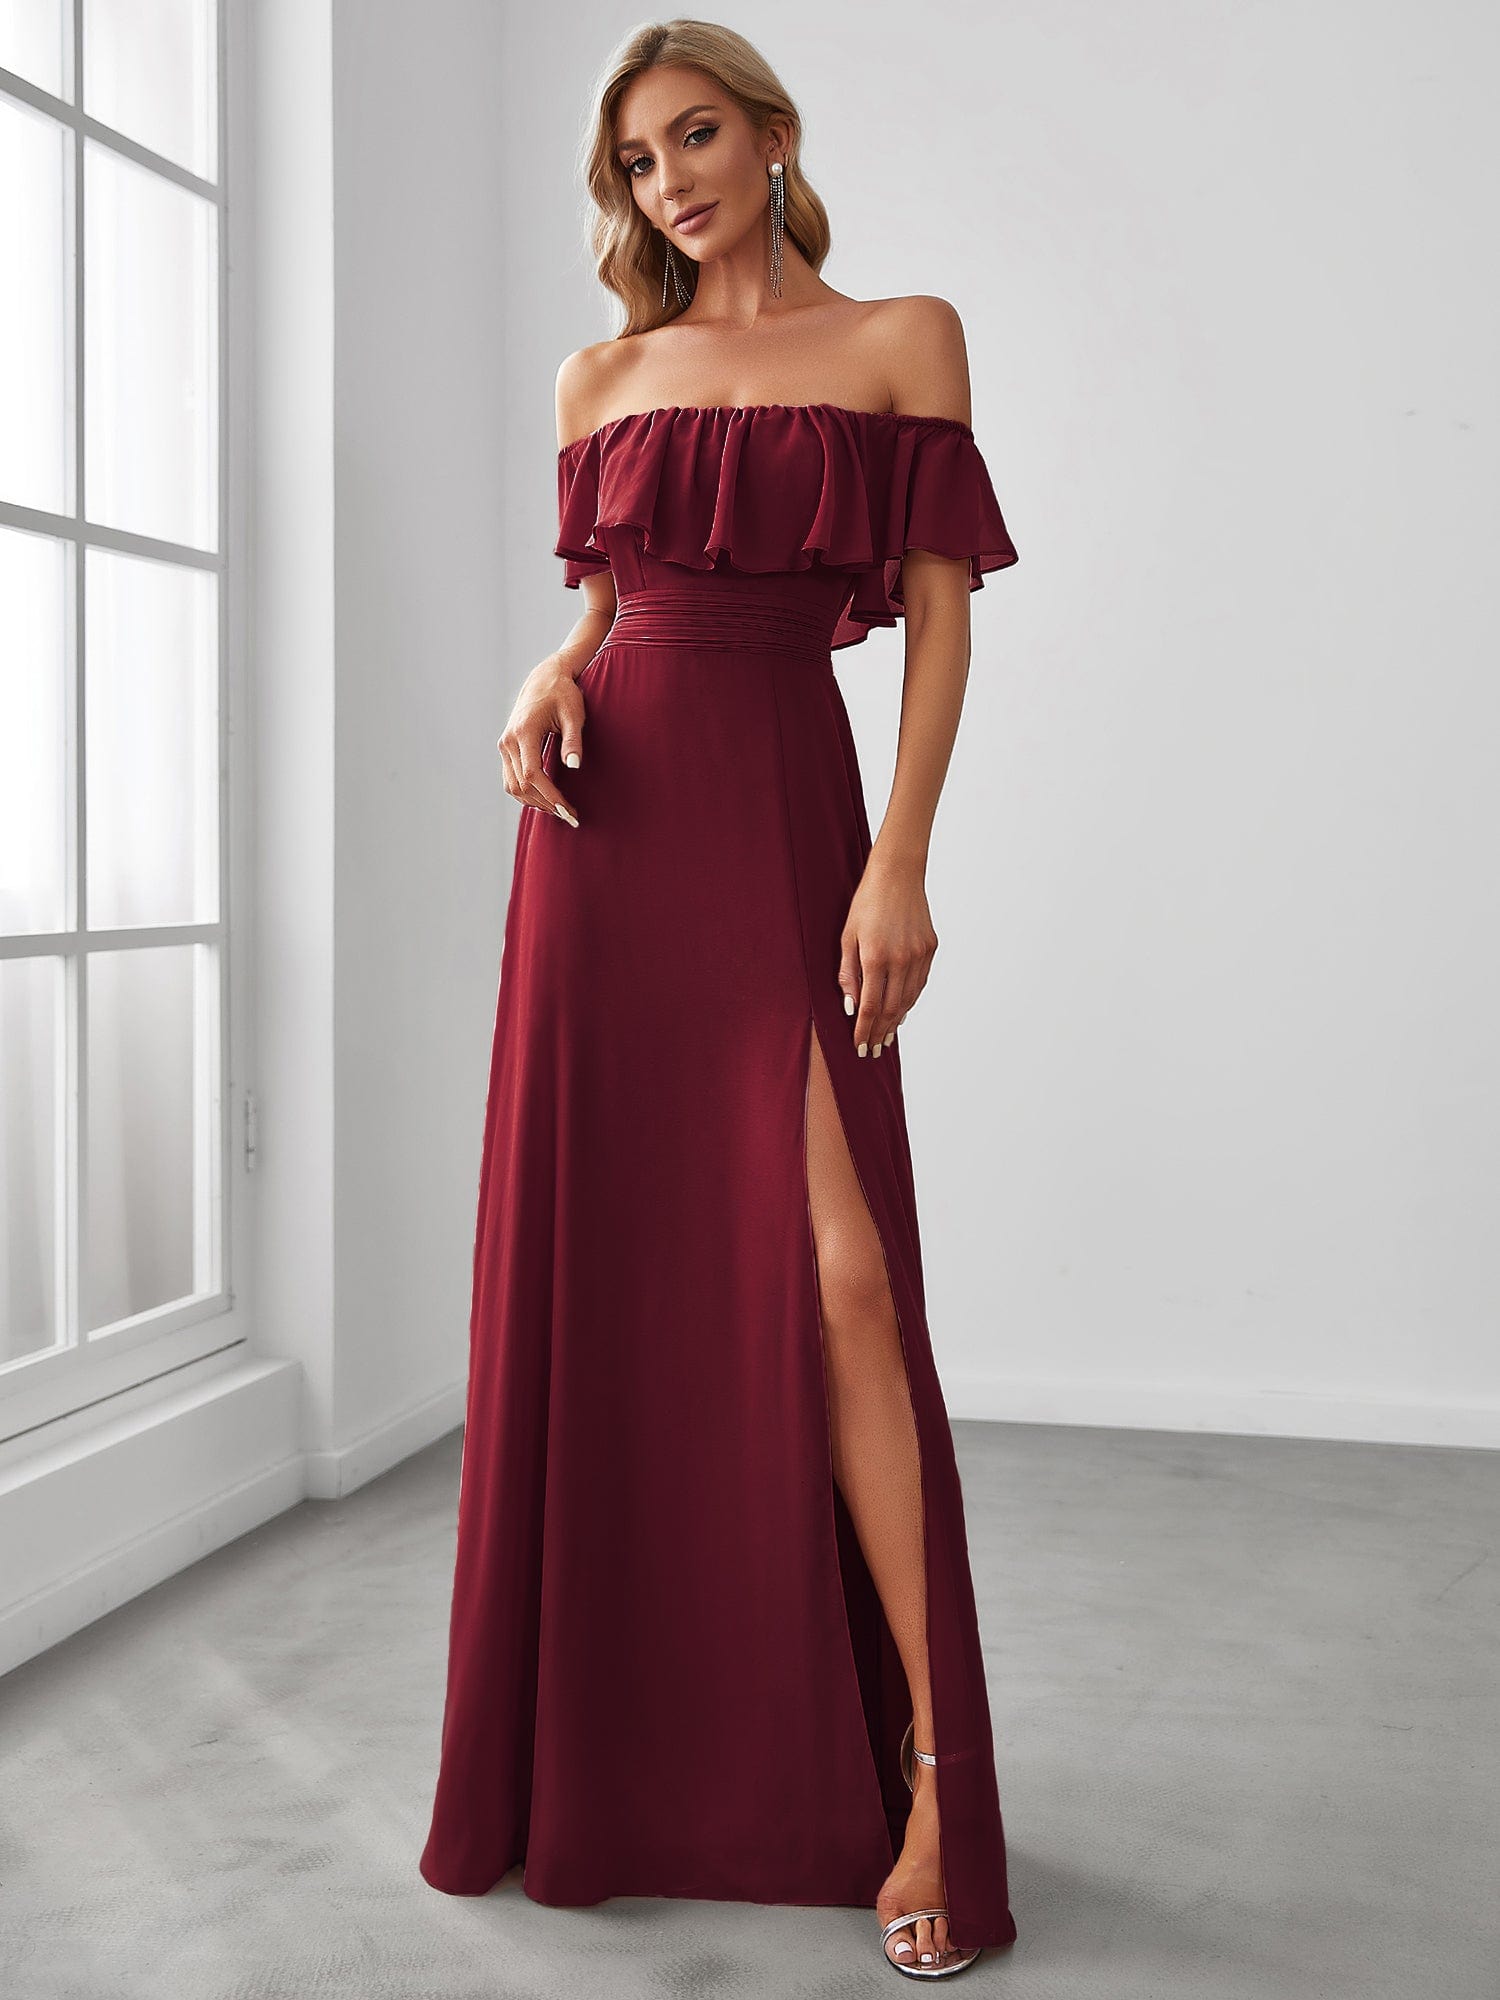 Off the Shoulder Side Split Burgundy Bridesmaid Dress - Ever-Pretty US